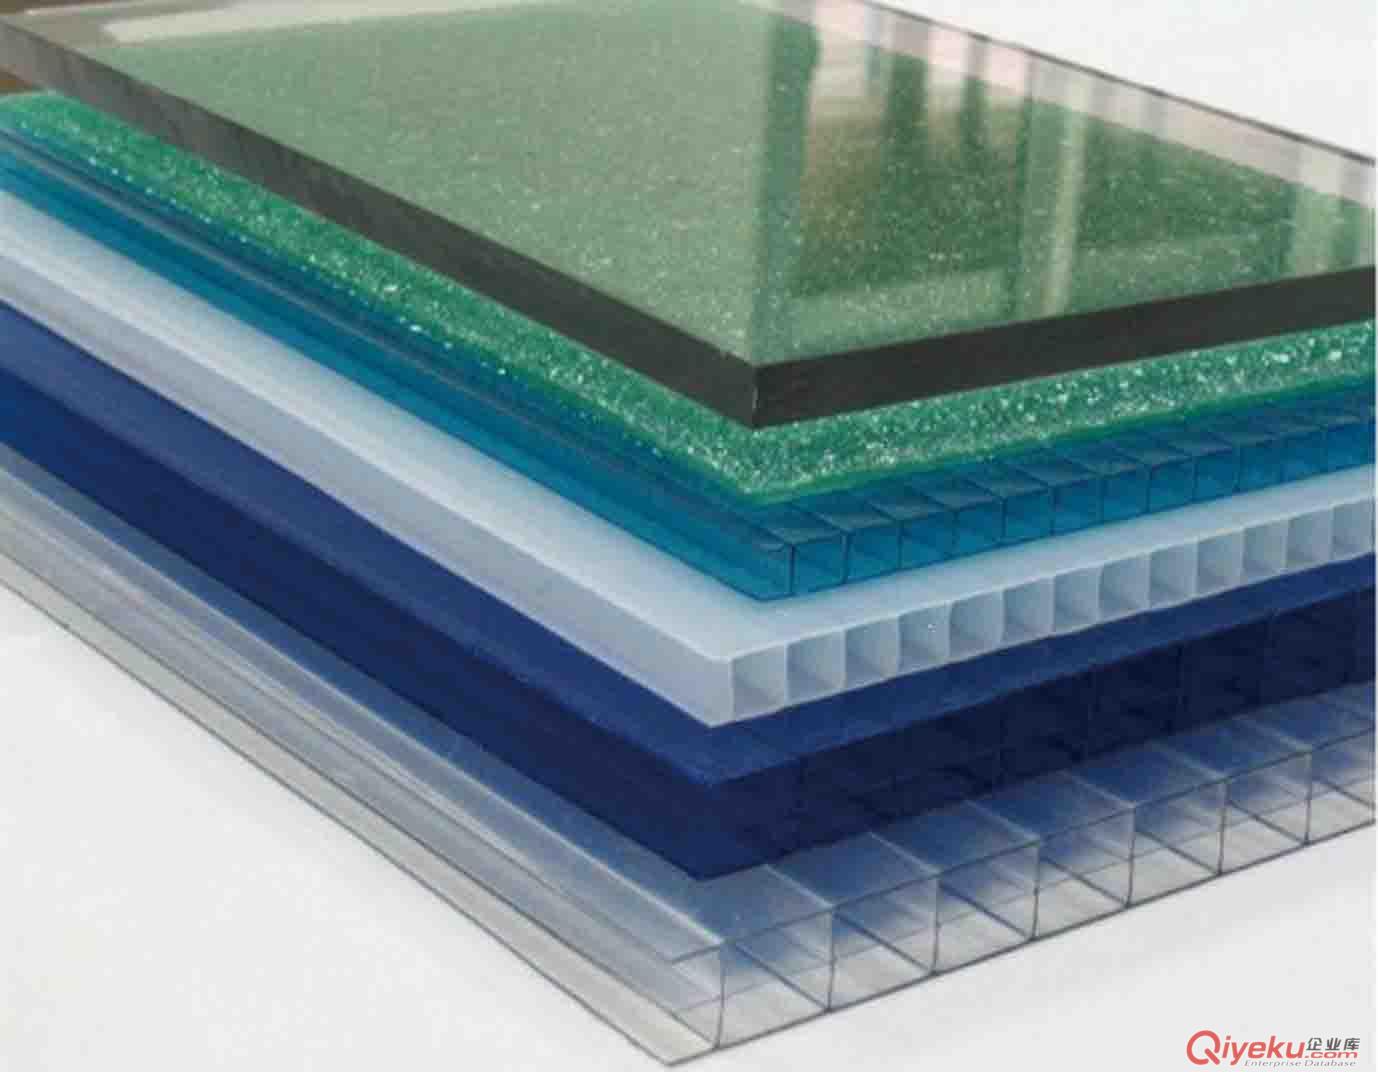 PC耐力板聚碳酸酯板防爆玻璃板图片|PC耐力板聚碳酸酯板防爆玻璃板产品图片由东莞市美邦工程塑料公司生产提供-